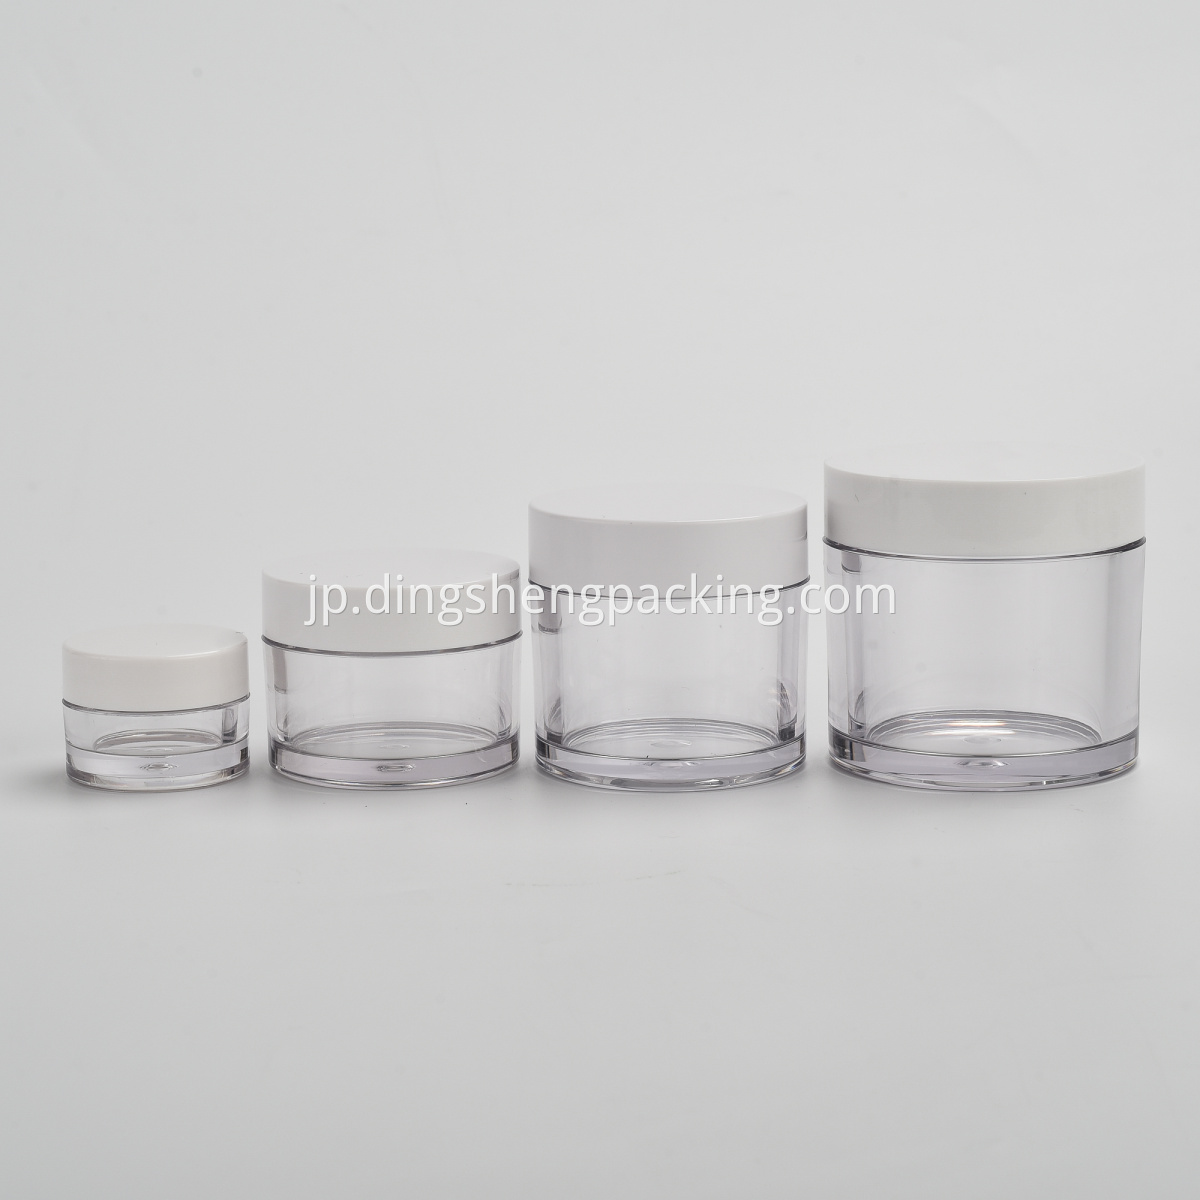 Cosmetic Cream Sleeping Mask PET Plastic Jar